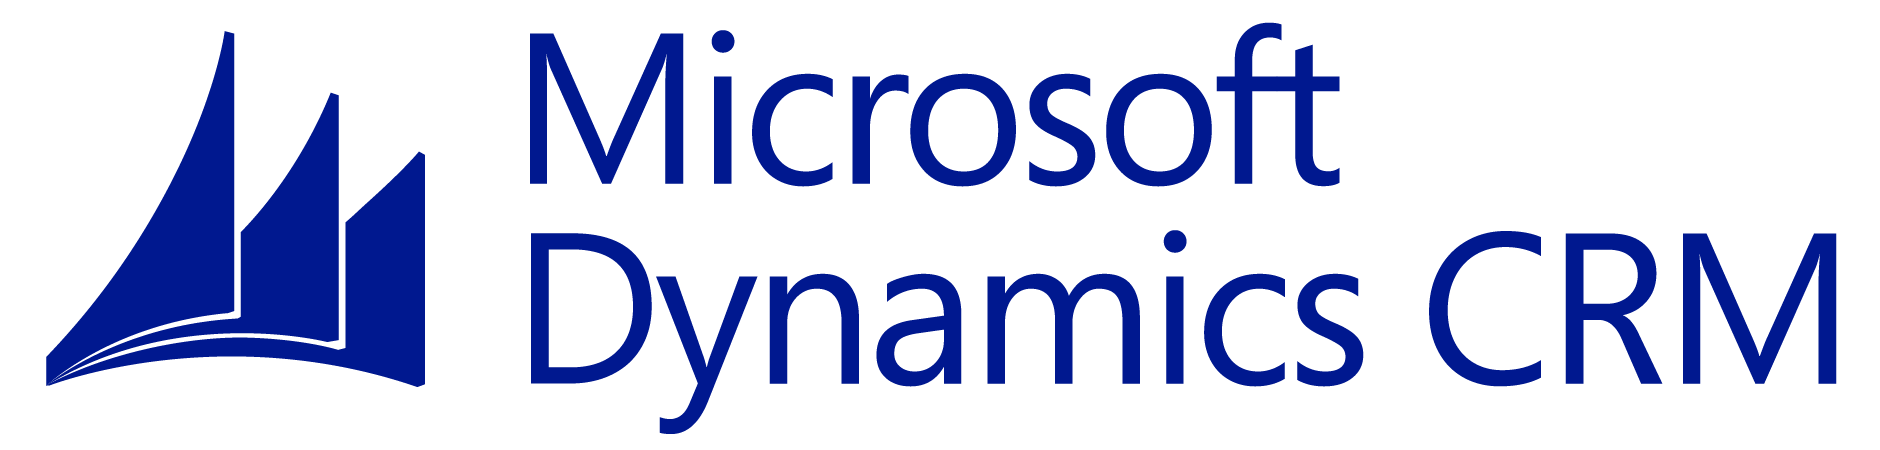 MS Dynamics CRM Logo - Management Training, Business Training and IT Training - TekSource ...